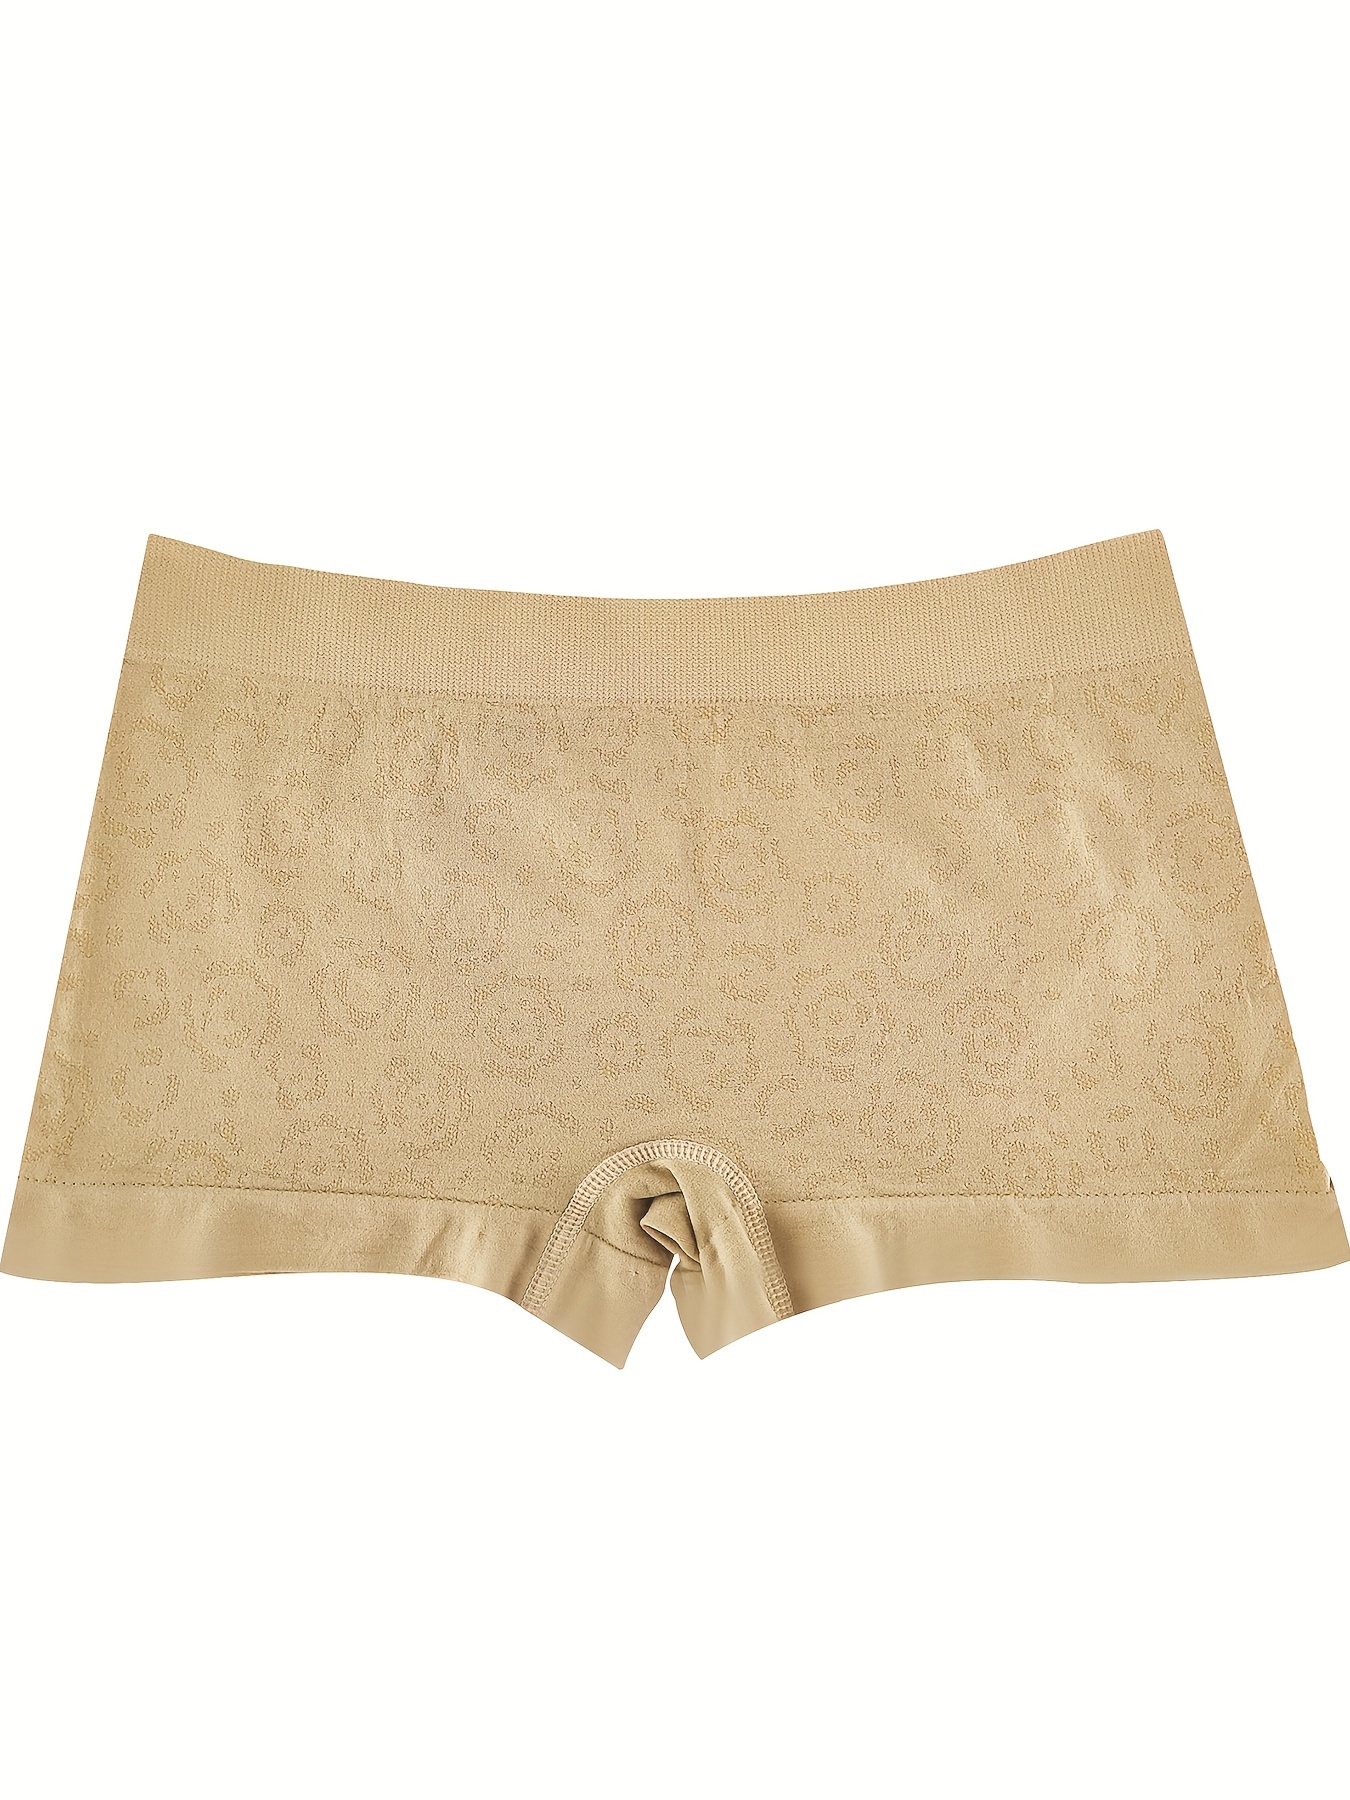 Elegant Lace Satin Safety Short Pants Women Home Sleeping Shorts Seamless Underwear  Female Safe Boxer Shorts Lingerie Underpants